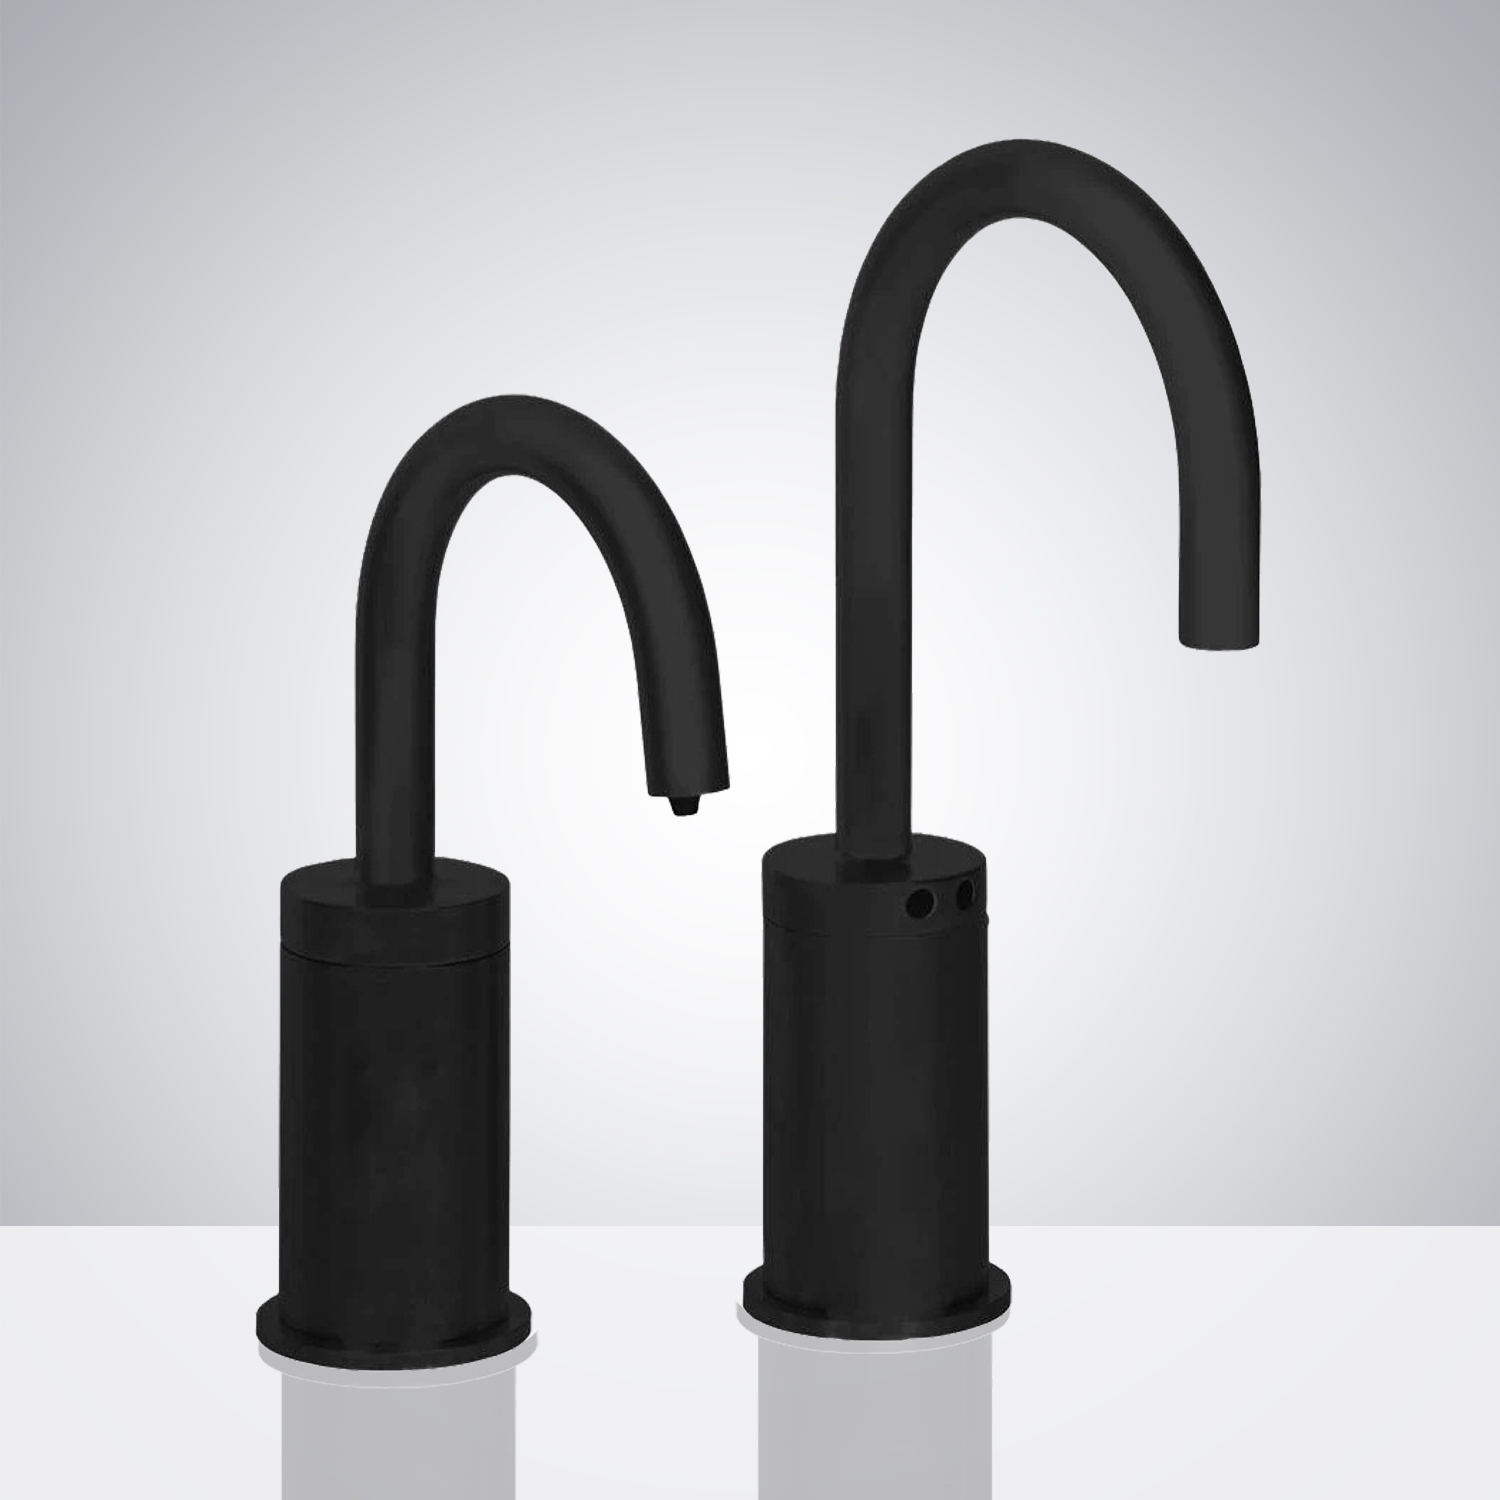 Fontana Atlanta Goose Neck Freestanding Automatic Commercial Sensor Faucet And Soap Dispenser in Matte Black Finish